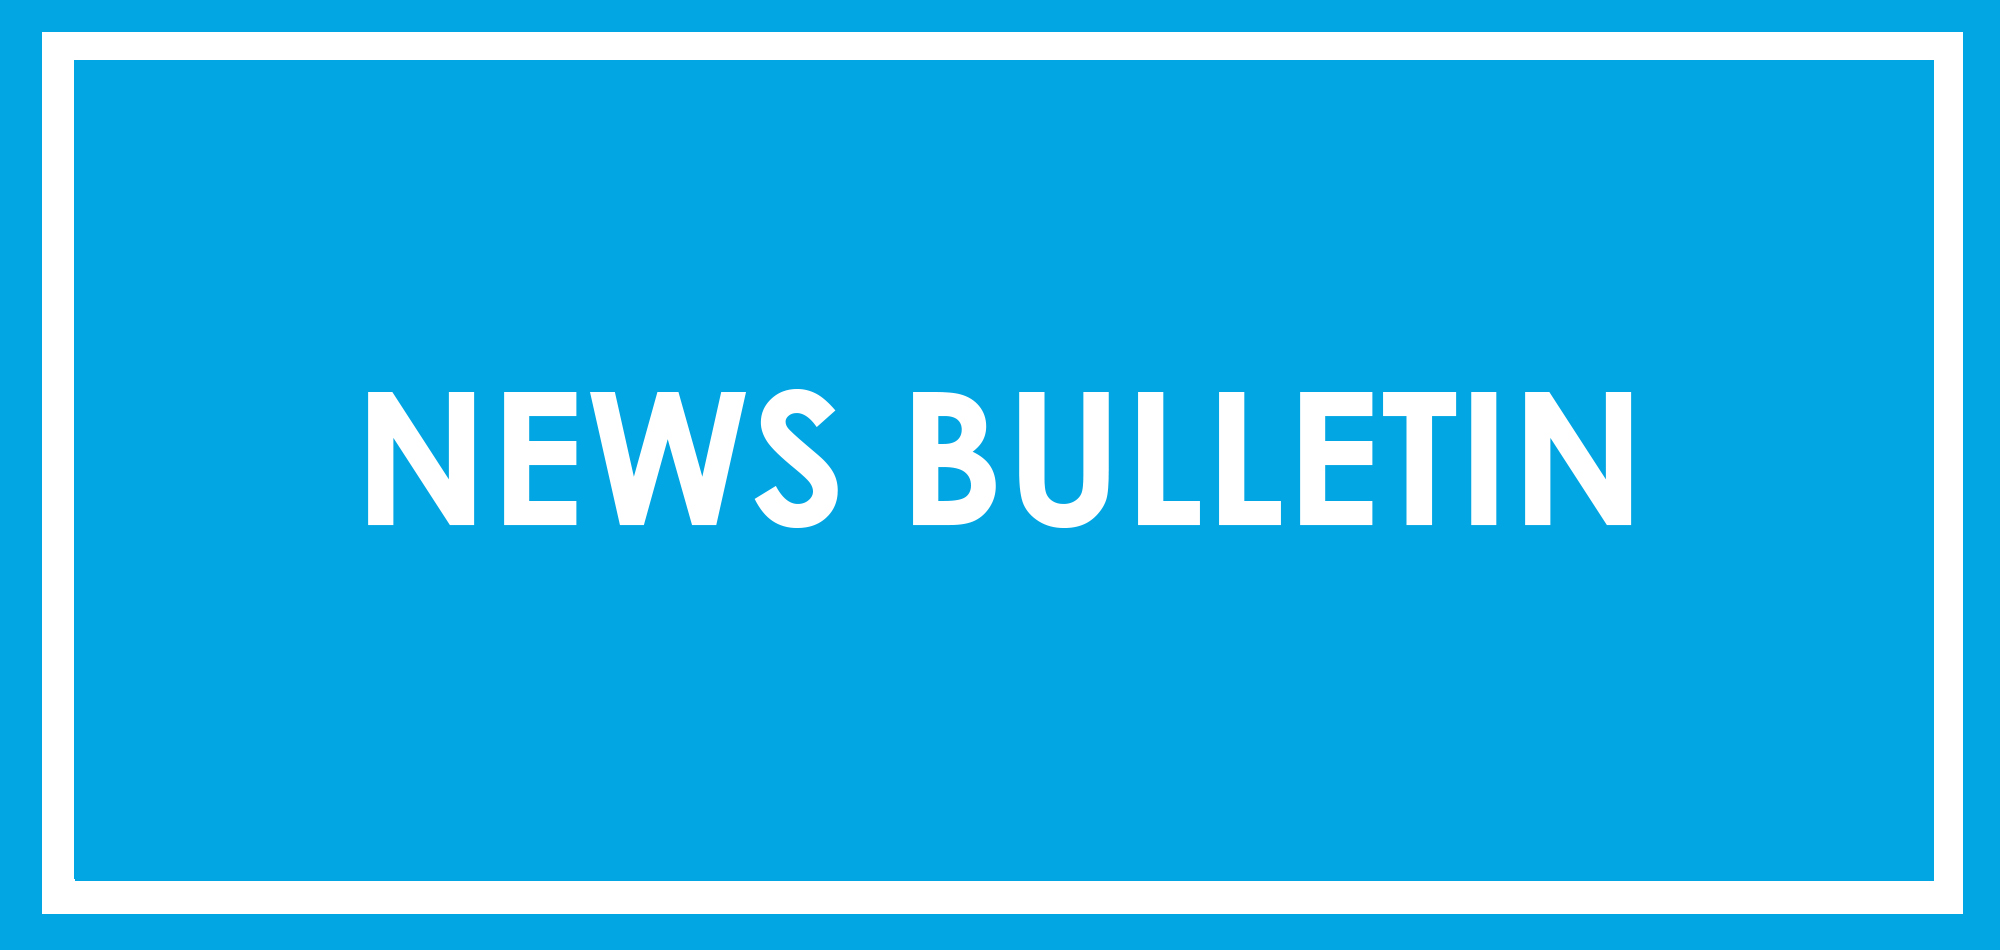 News Bulletin - 09.07.20